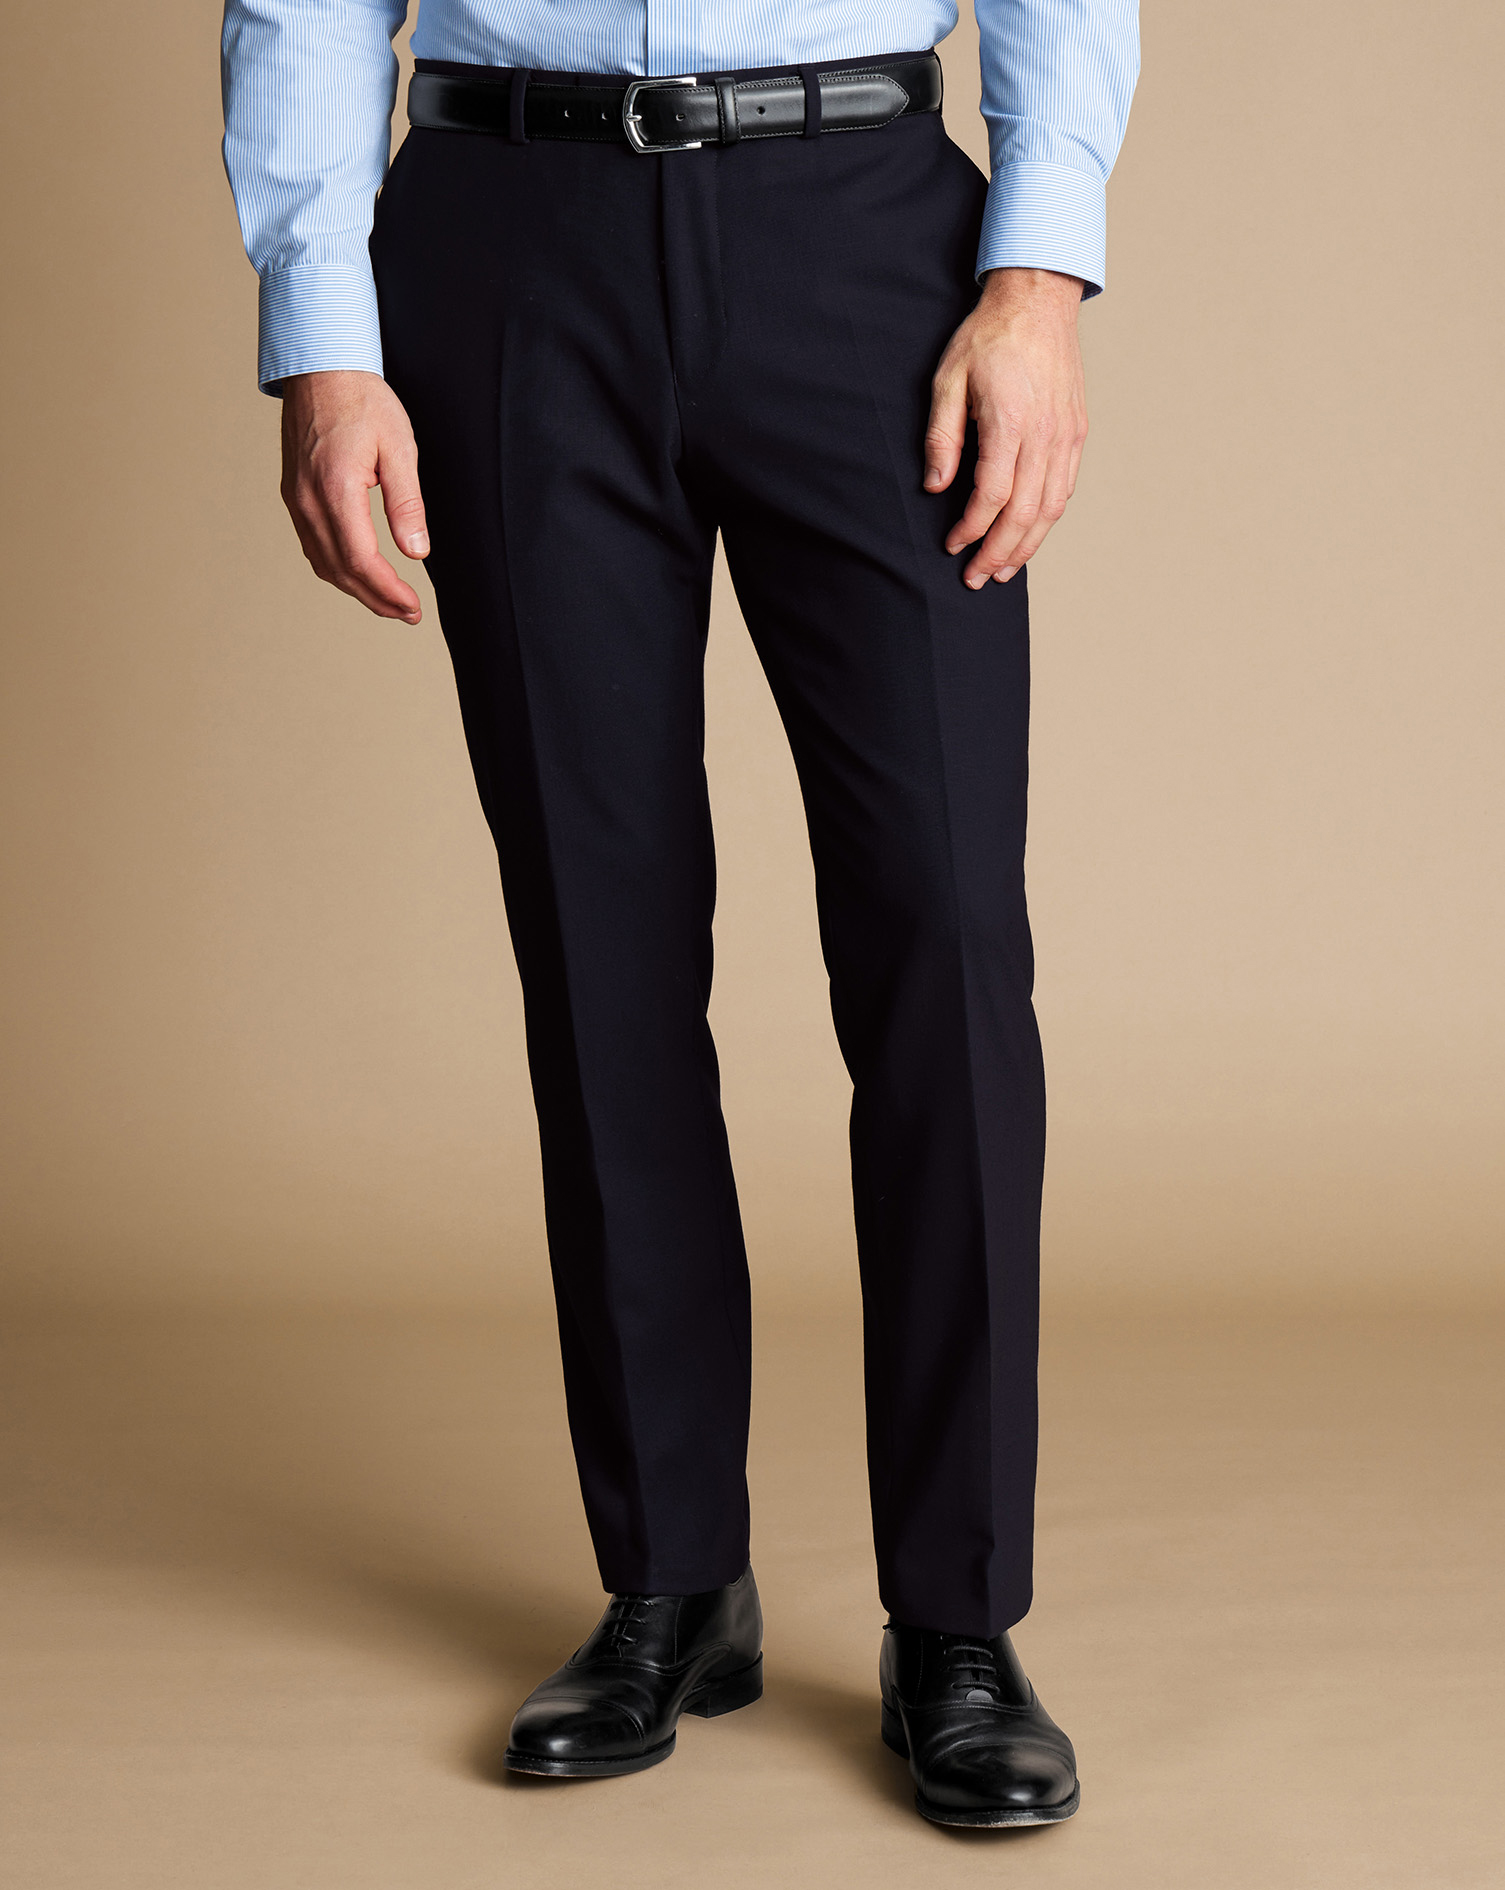 Men's Charles Tyrwhitt Ultimate Performance Suit Trousers - Dark Navy Blue Size 32/32 Wool
